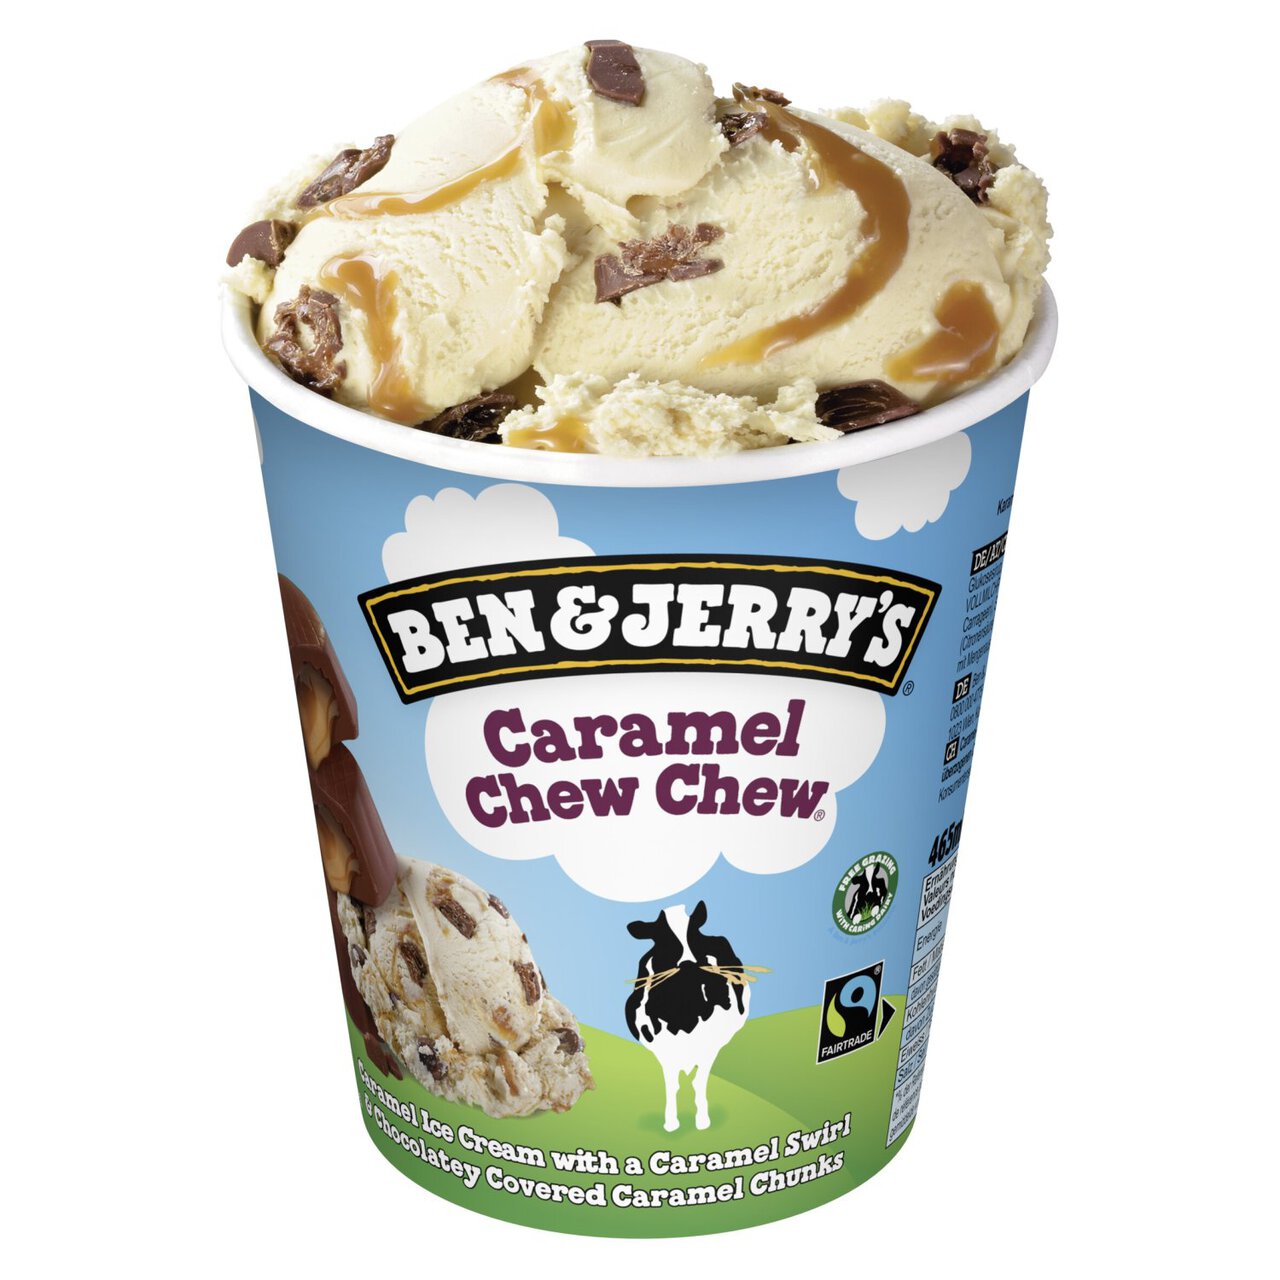 Ben & Jerry's Caramel Chew Chew Ice Cream Tub 465ml